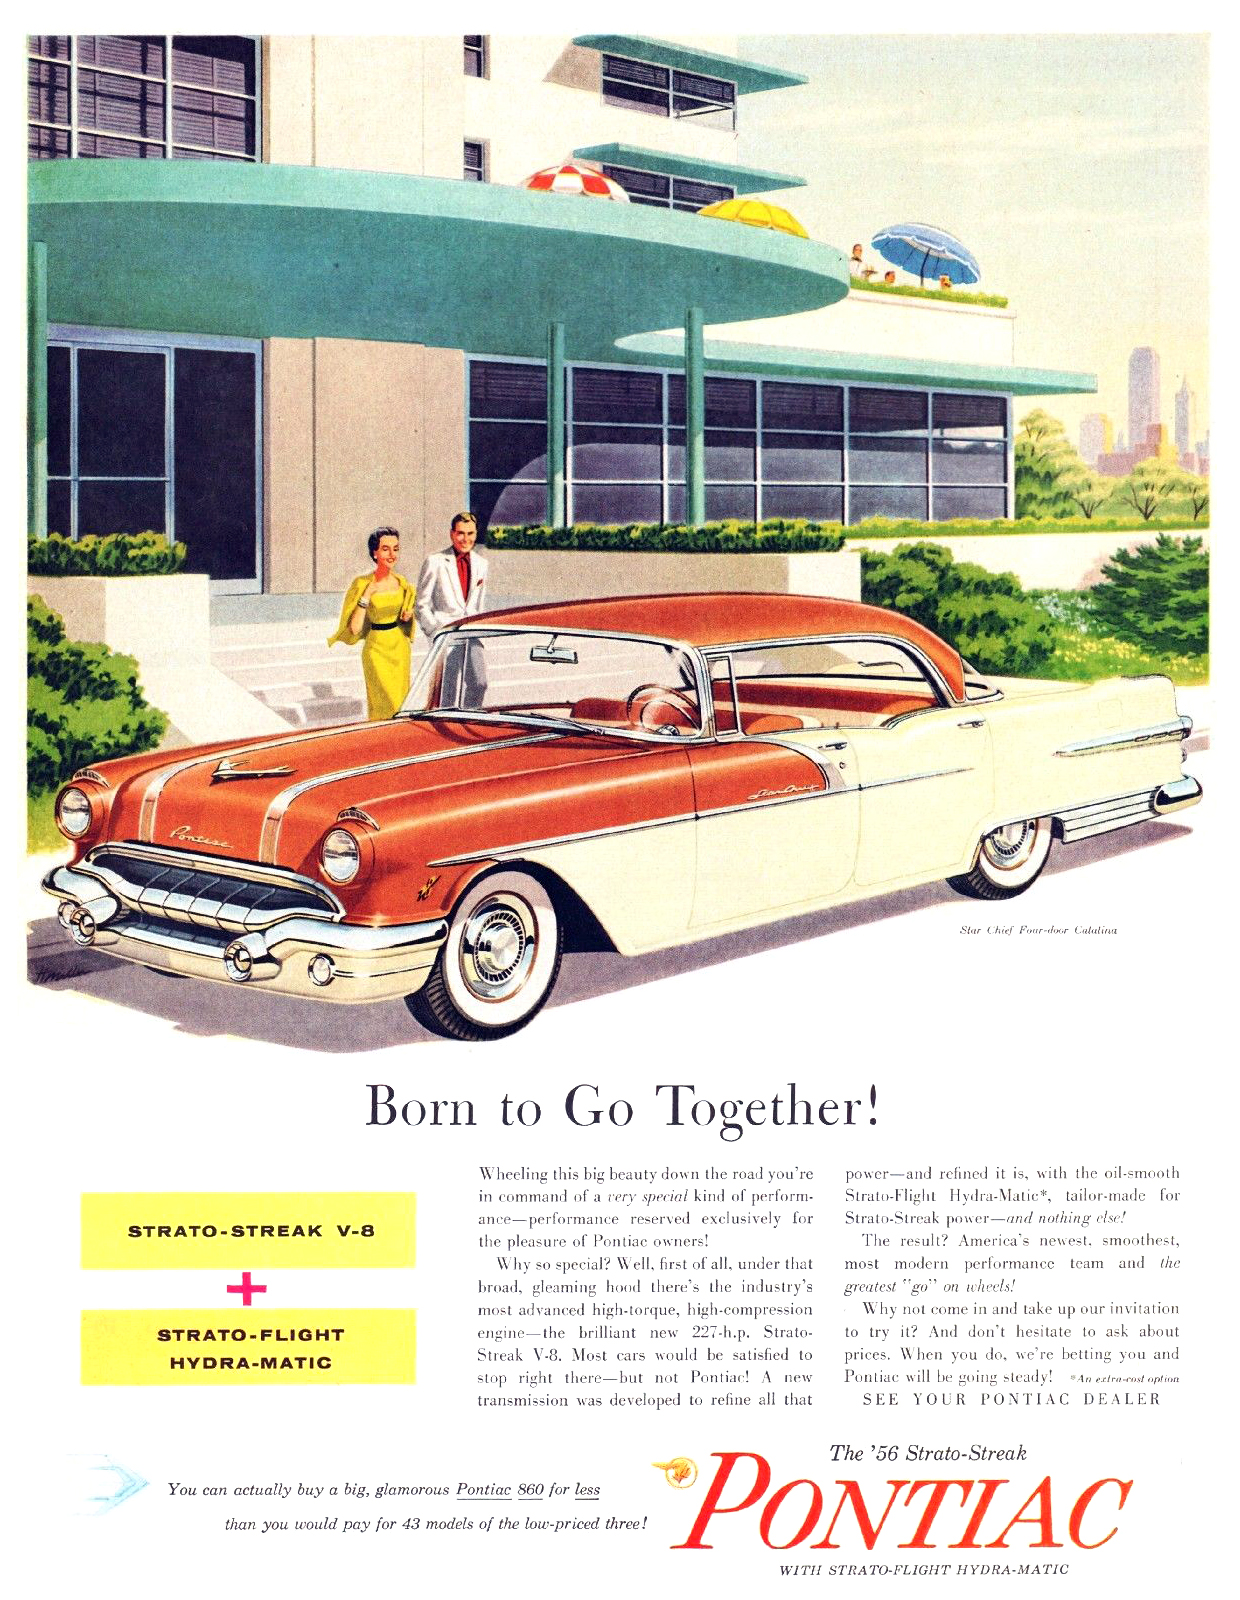 Pontiac Star Chief Four-Door Catalina Ad (June-July, 1956)